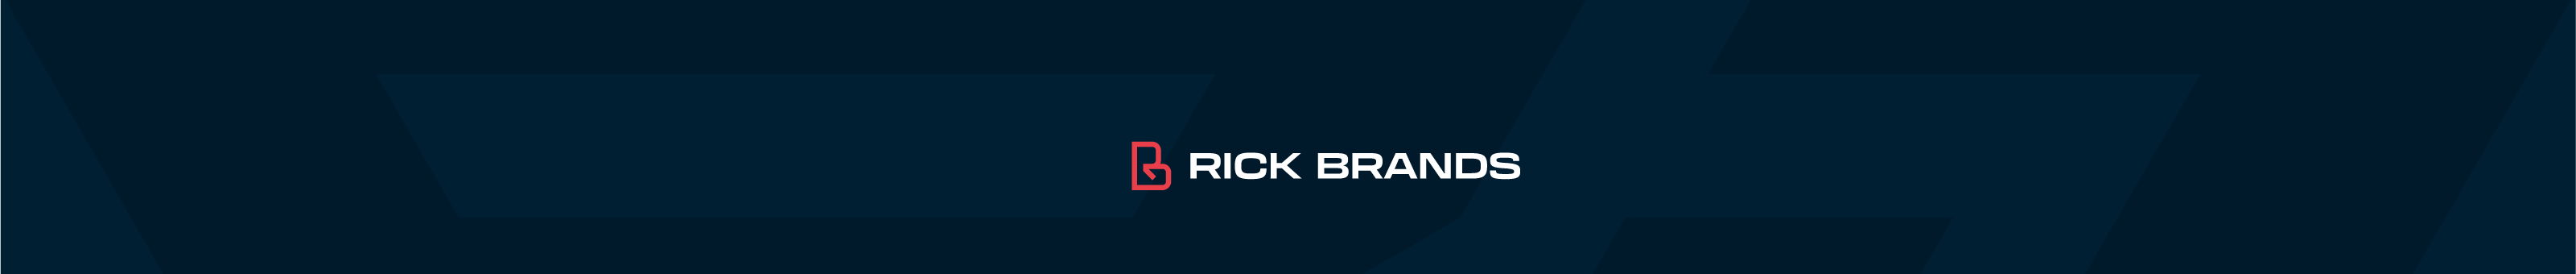 Баннер профиля Rick Brands